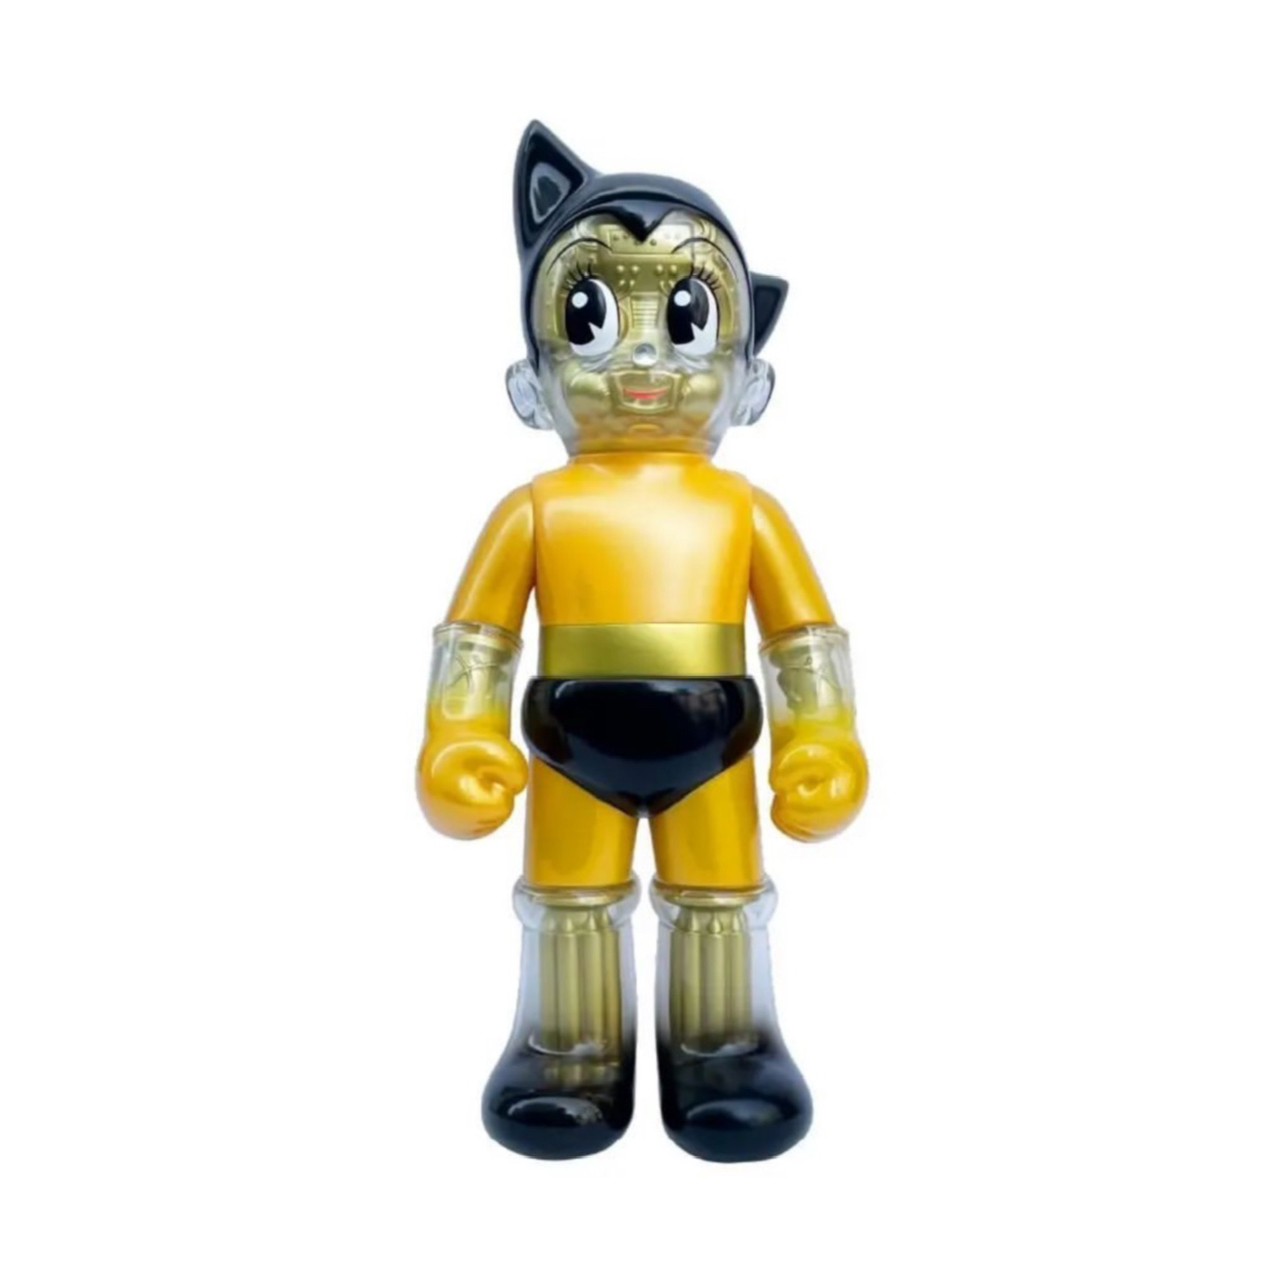 Middle scale Astro Boy Gray Ver.